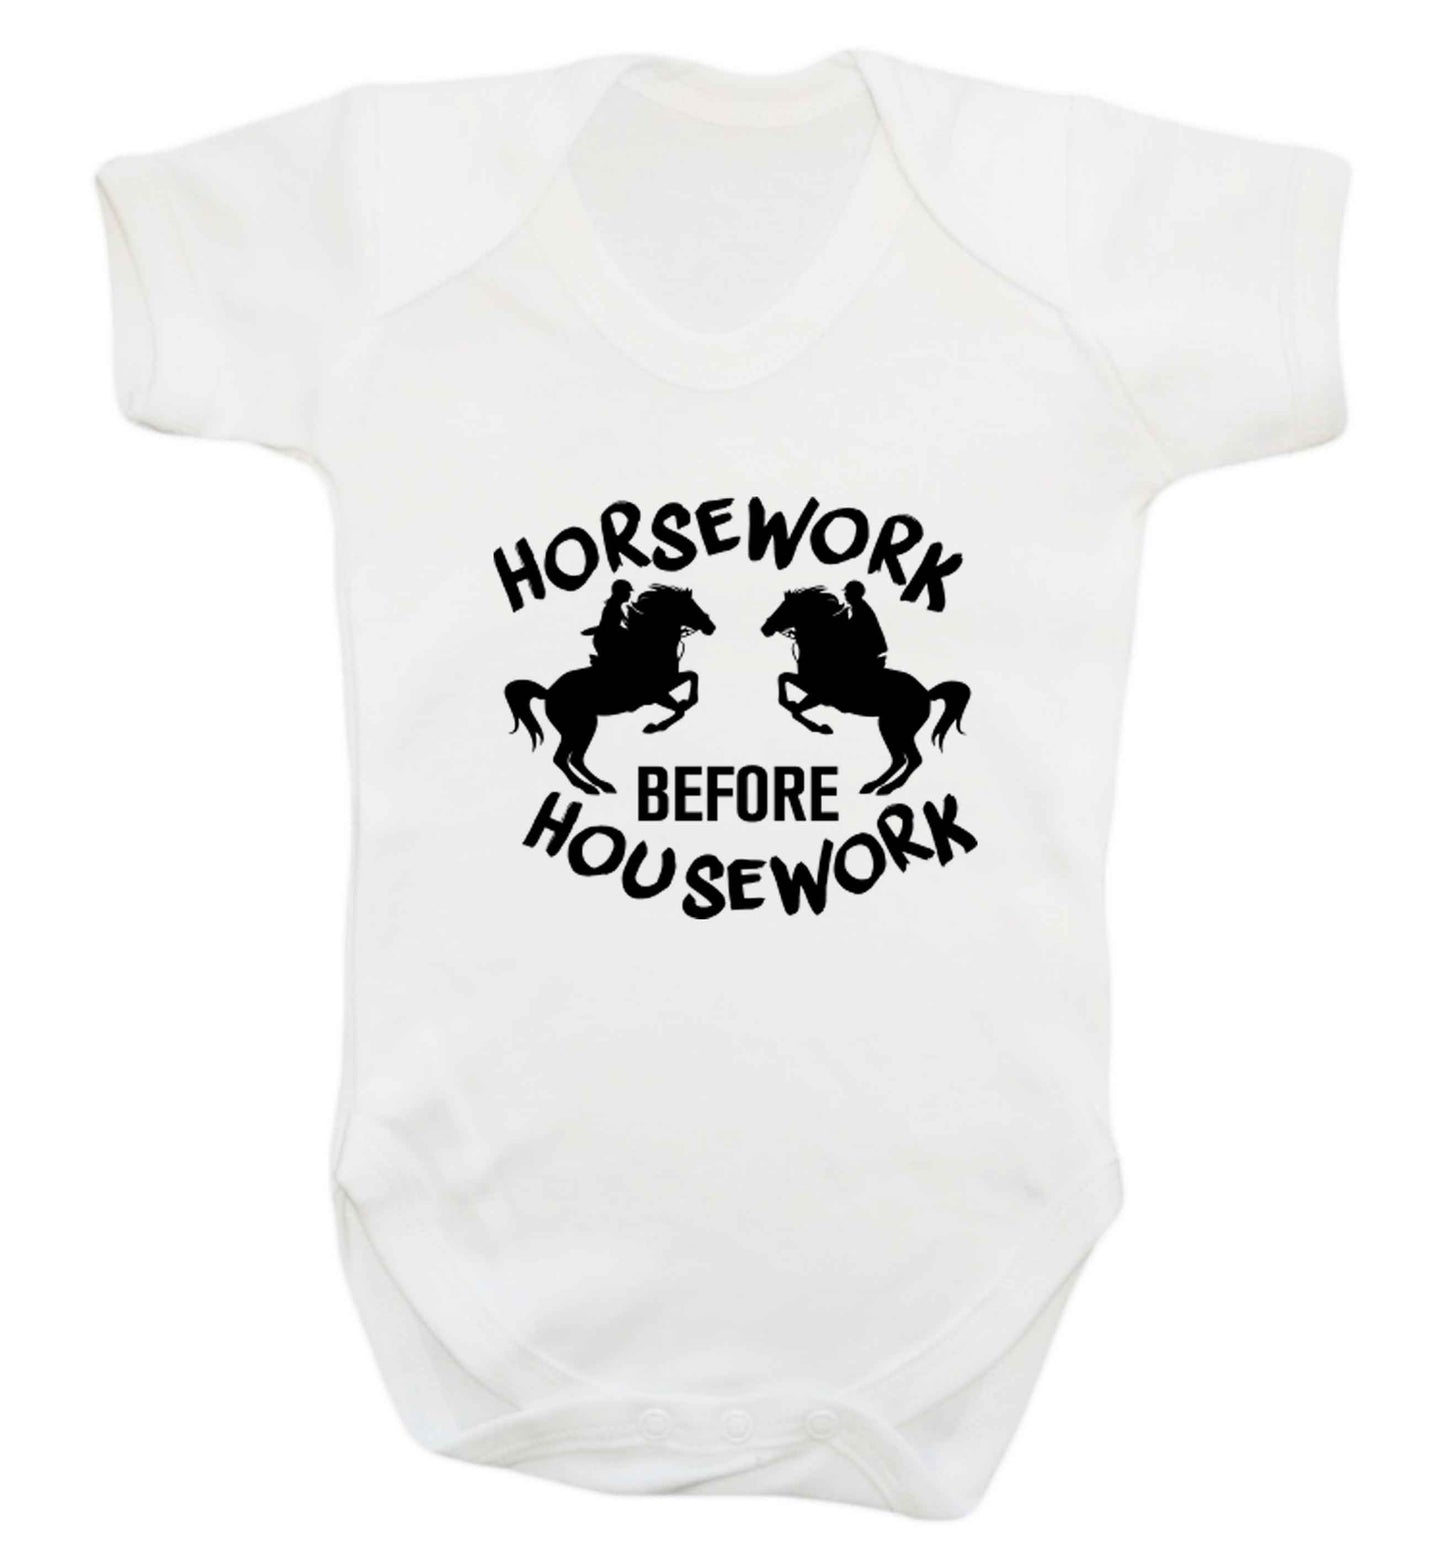 Horsework before housework baby vest white 18-24 months